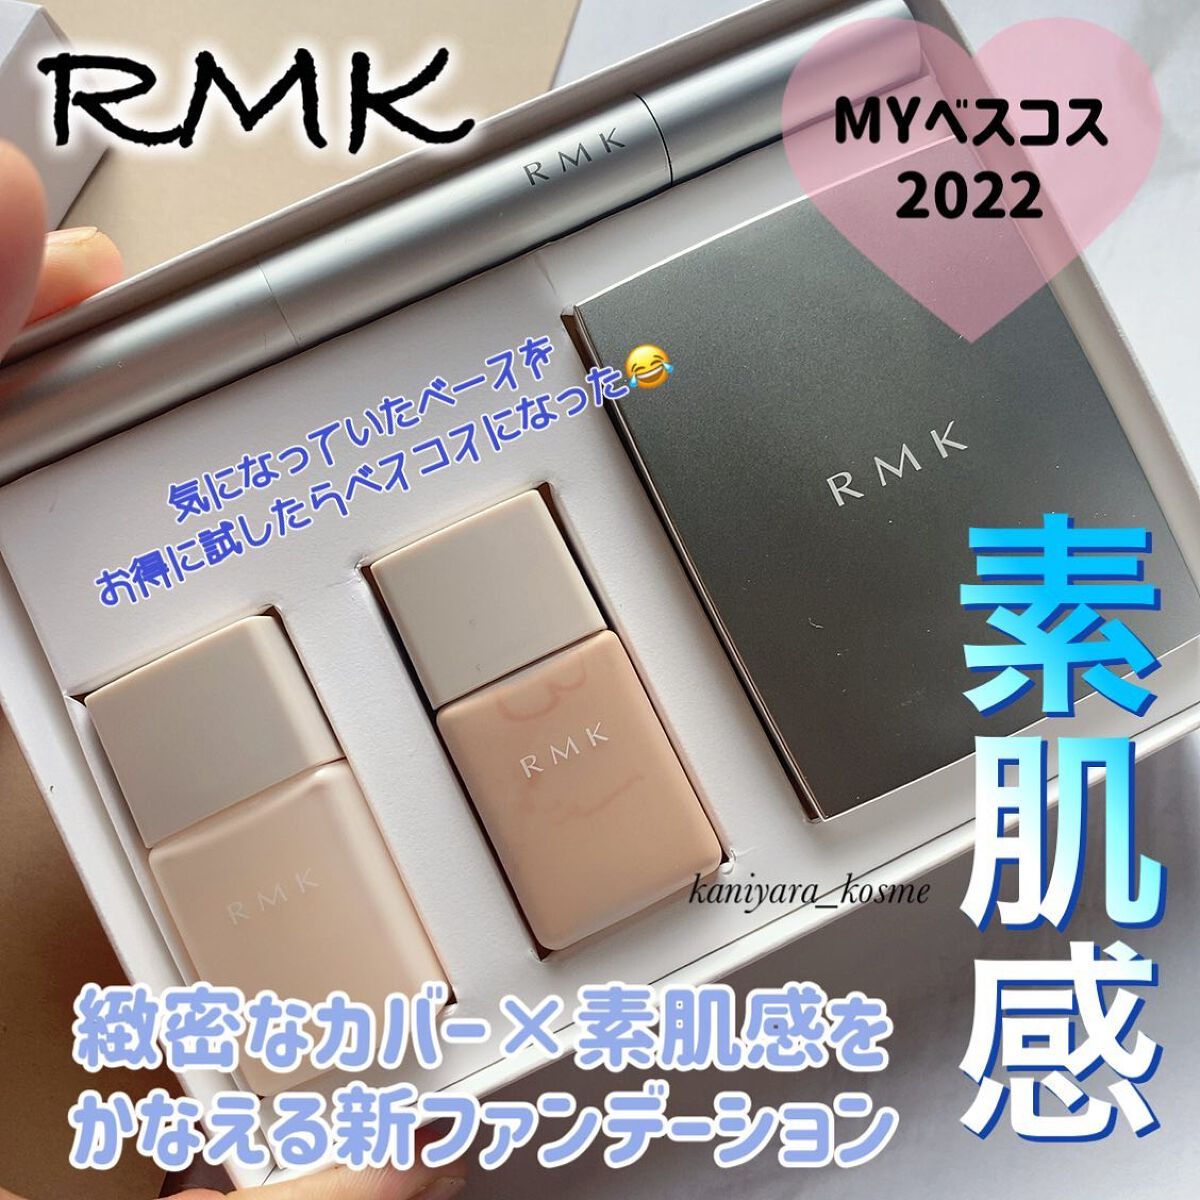 RMK ミニベースメイクアップセレクション 201